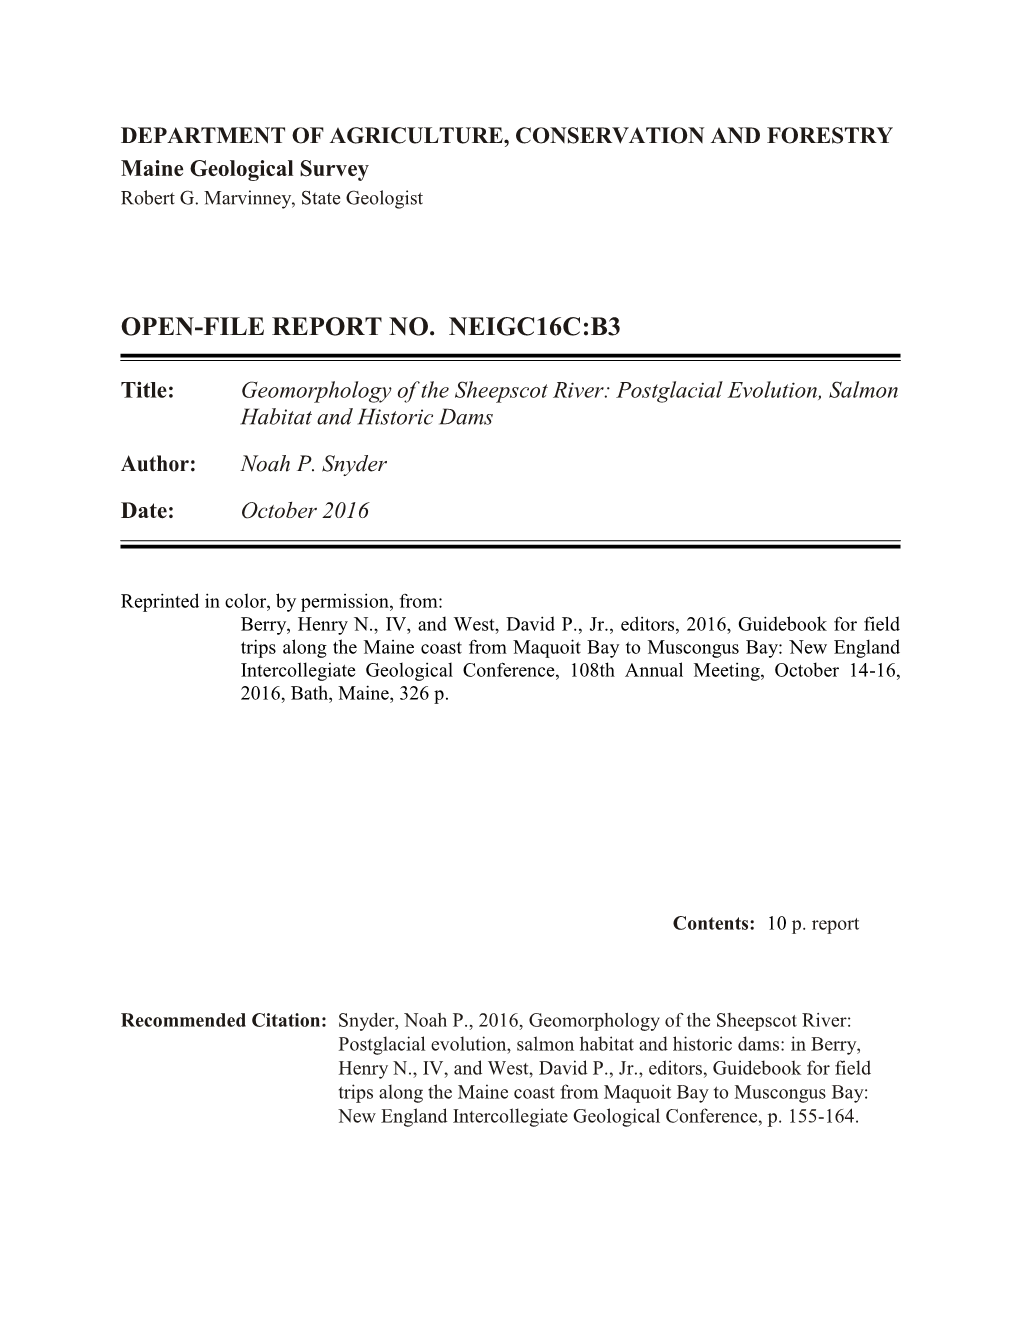 Open-File Report No. Neigc16c:B3